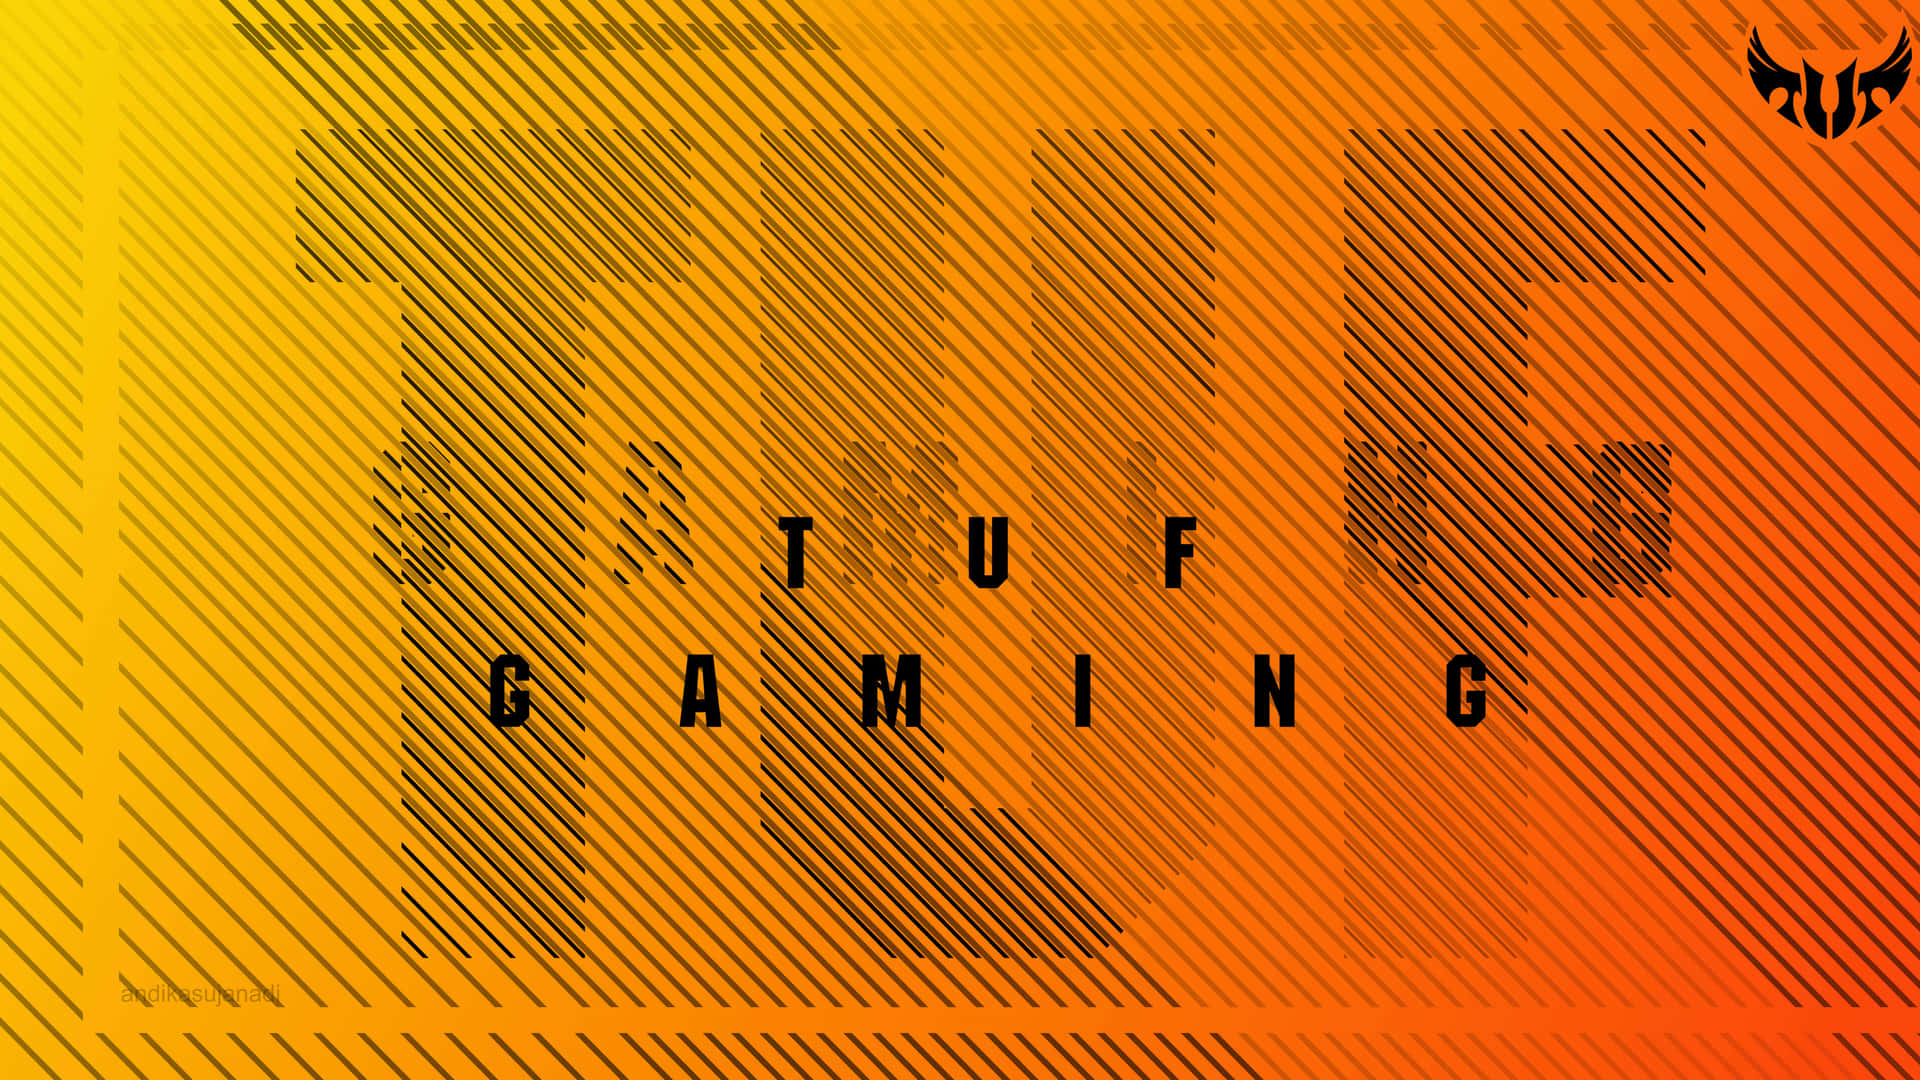 Asus T U F Gaming Branding Background